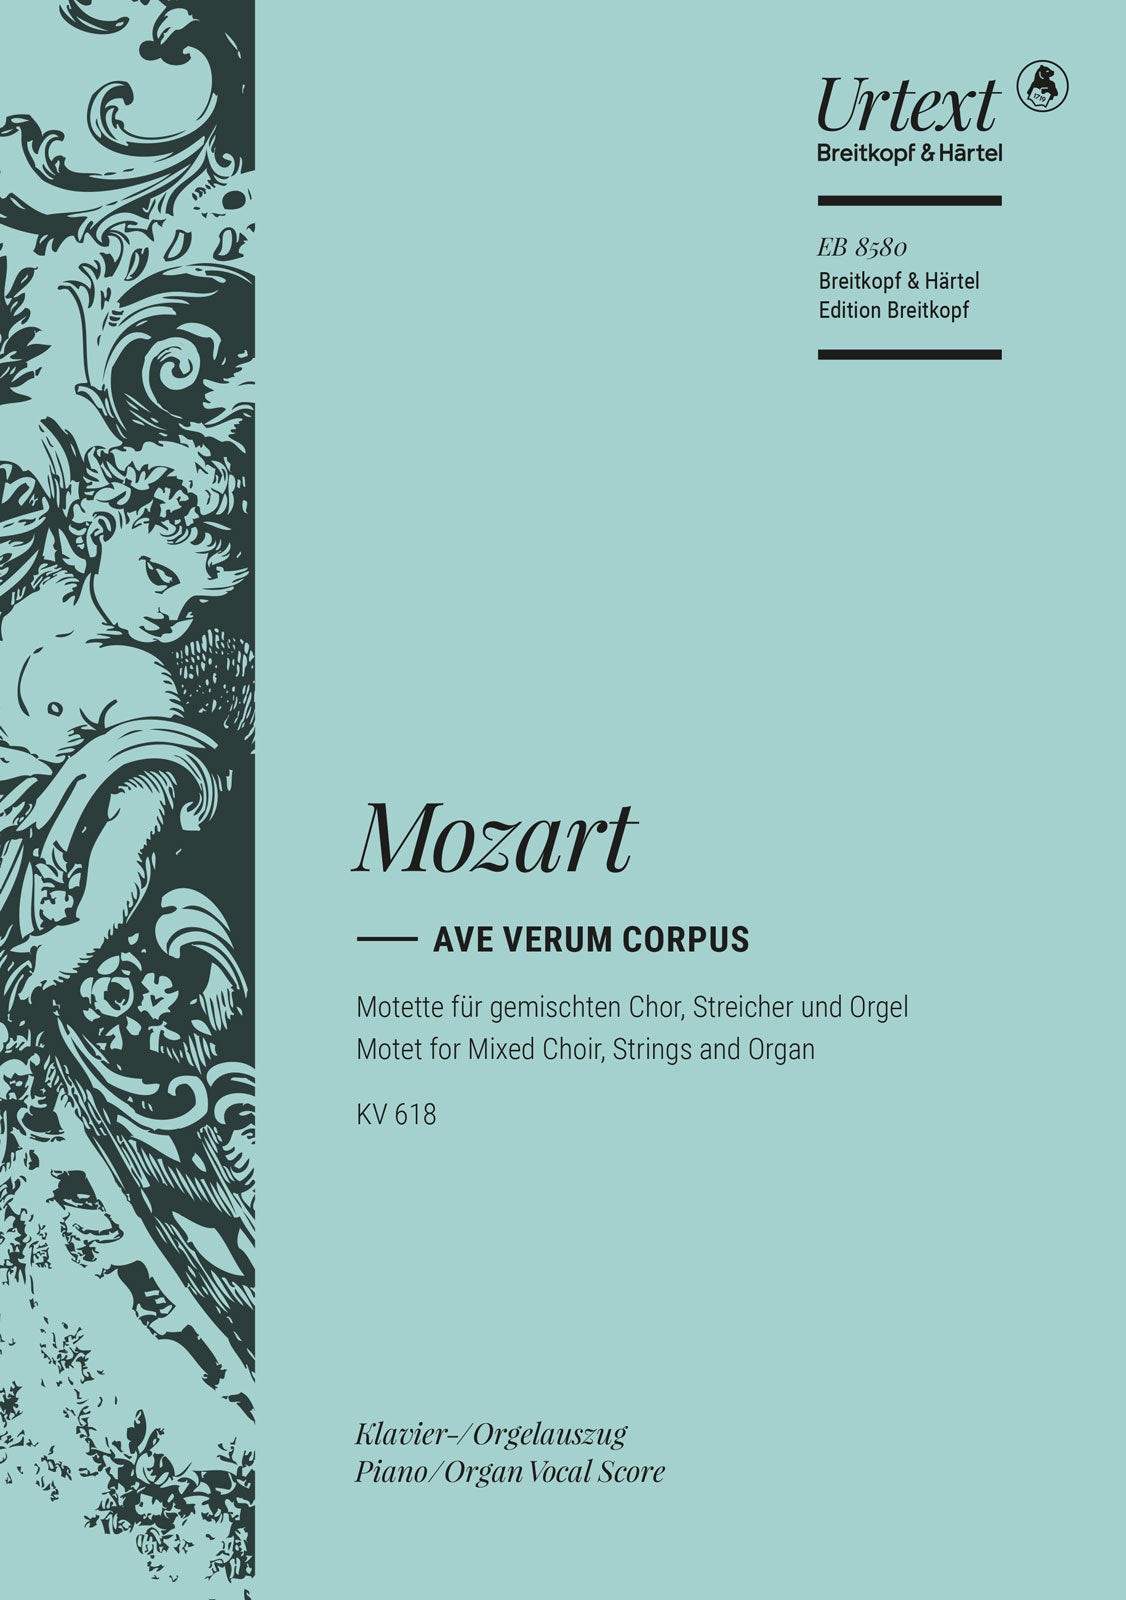 Mozart “Ave verum Corpus” K 618